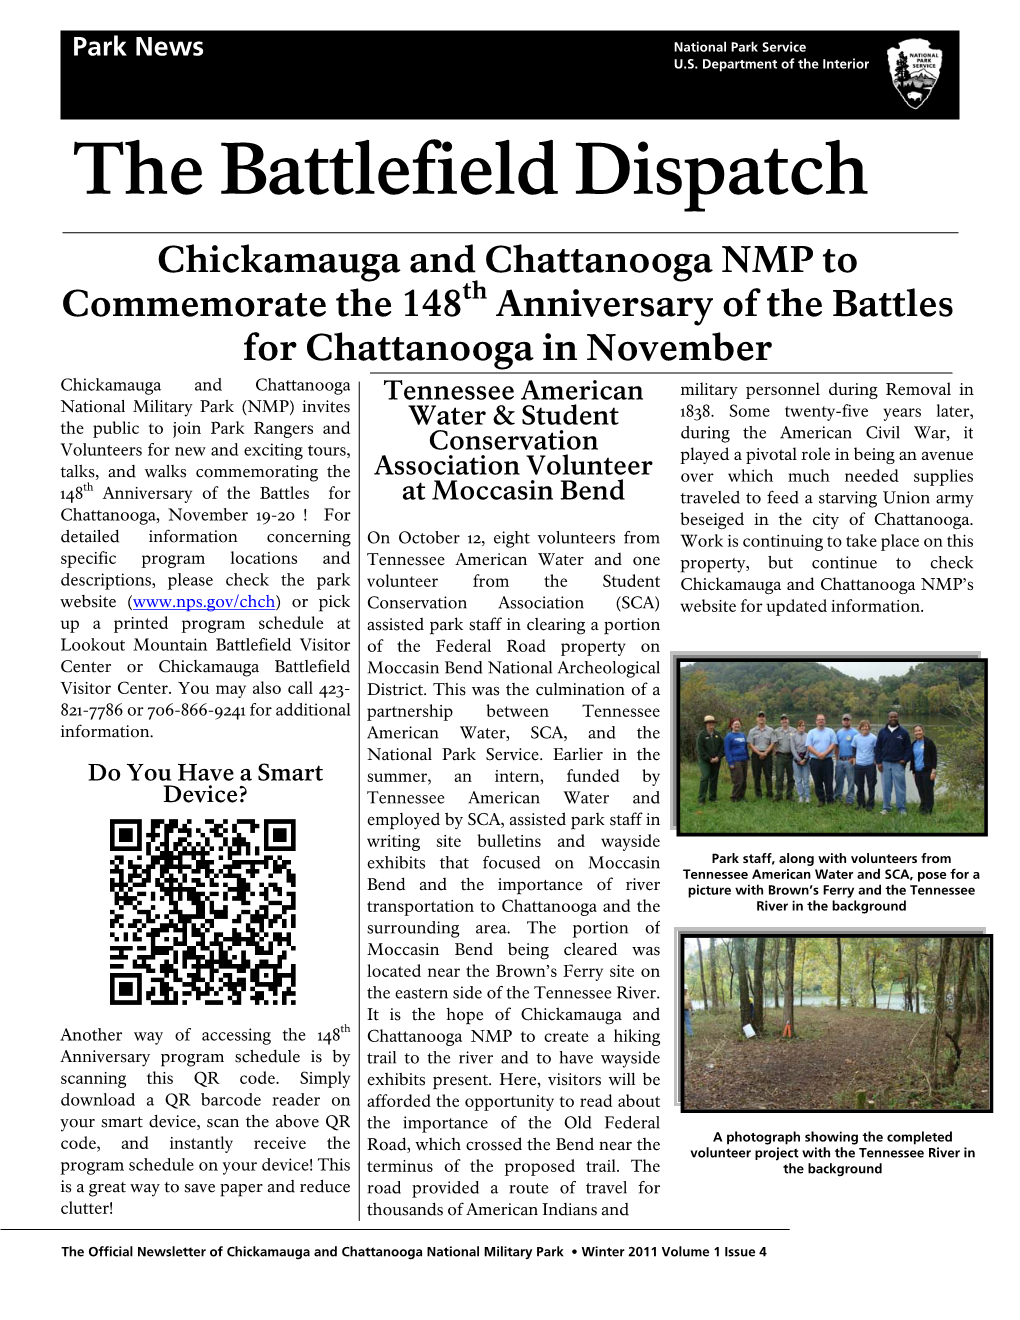 The Battlefield Dispatch